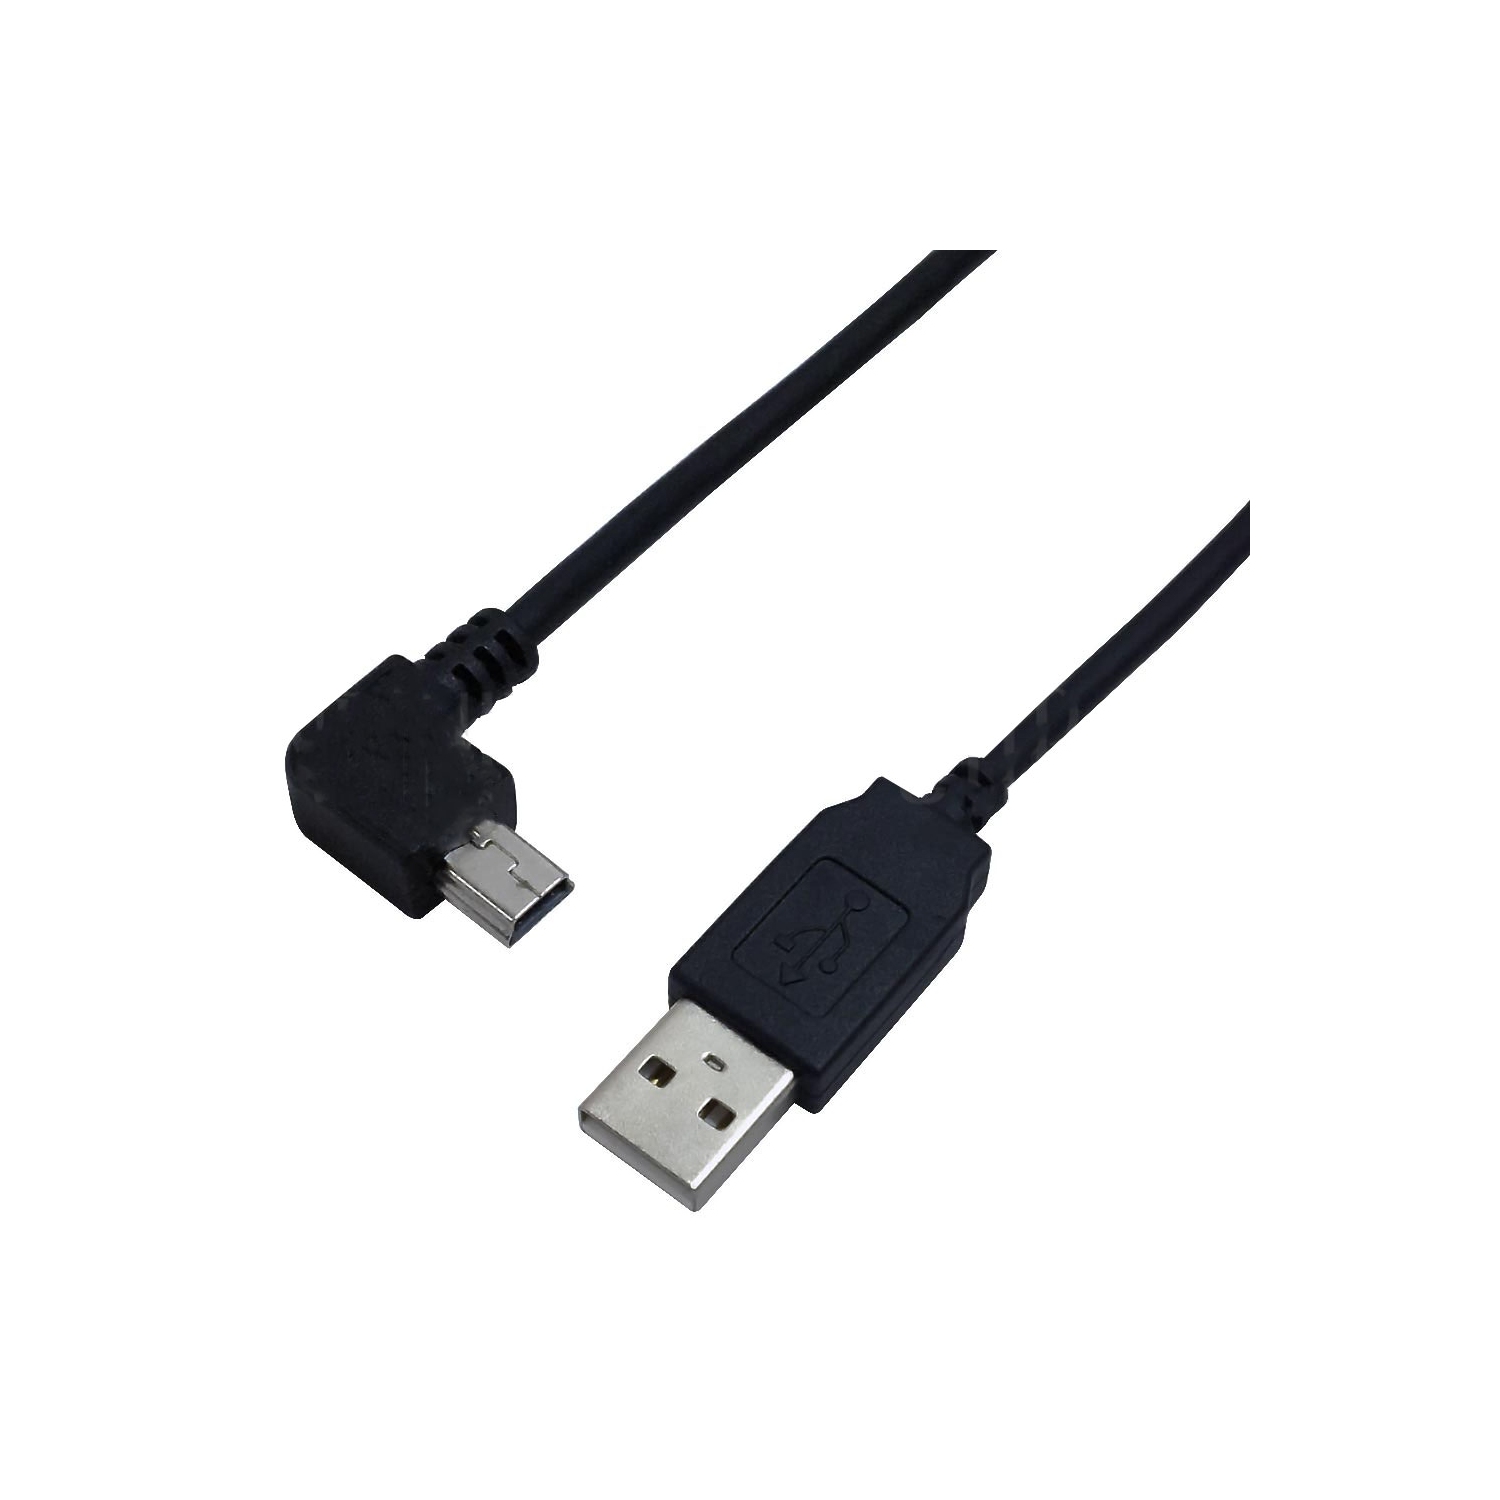 Free Shipping! HYFAI USB 2.0 A Straight Male to Mini-B 5-Pin Mini USB Right Angle Male Cable, 10 ft